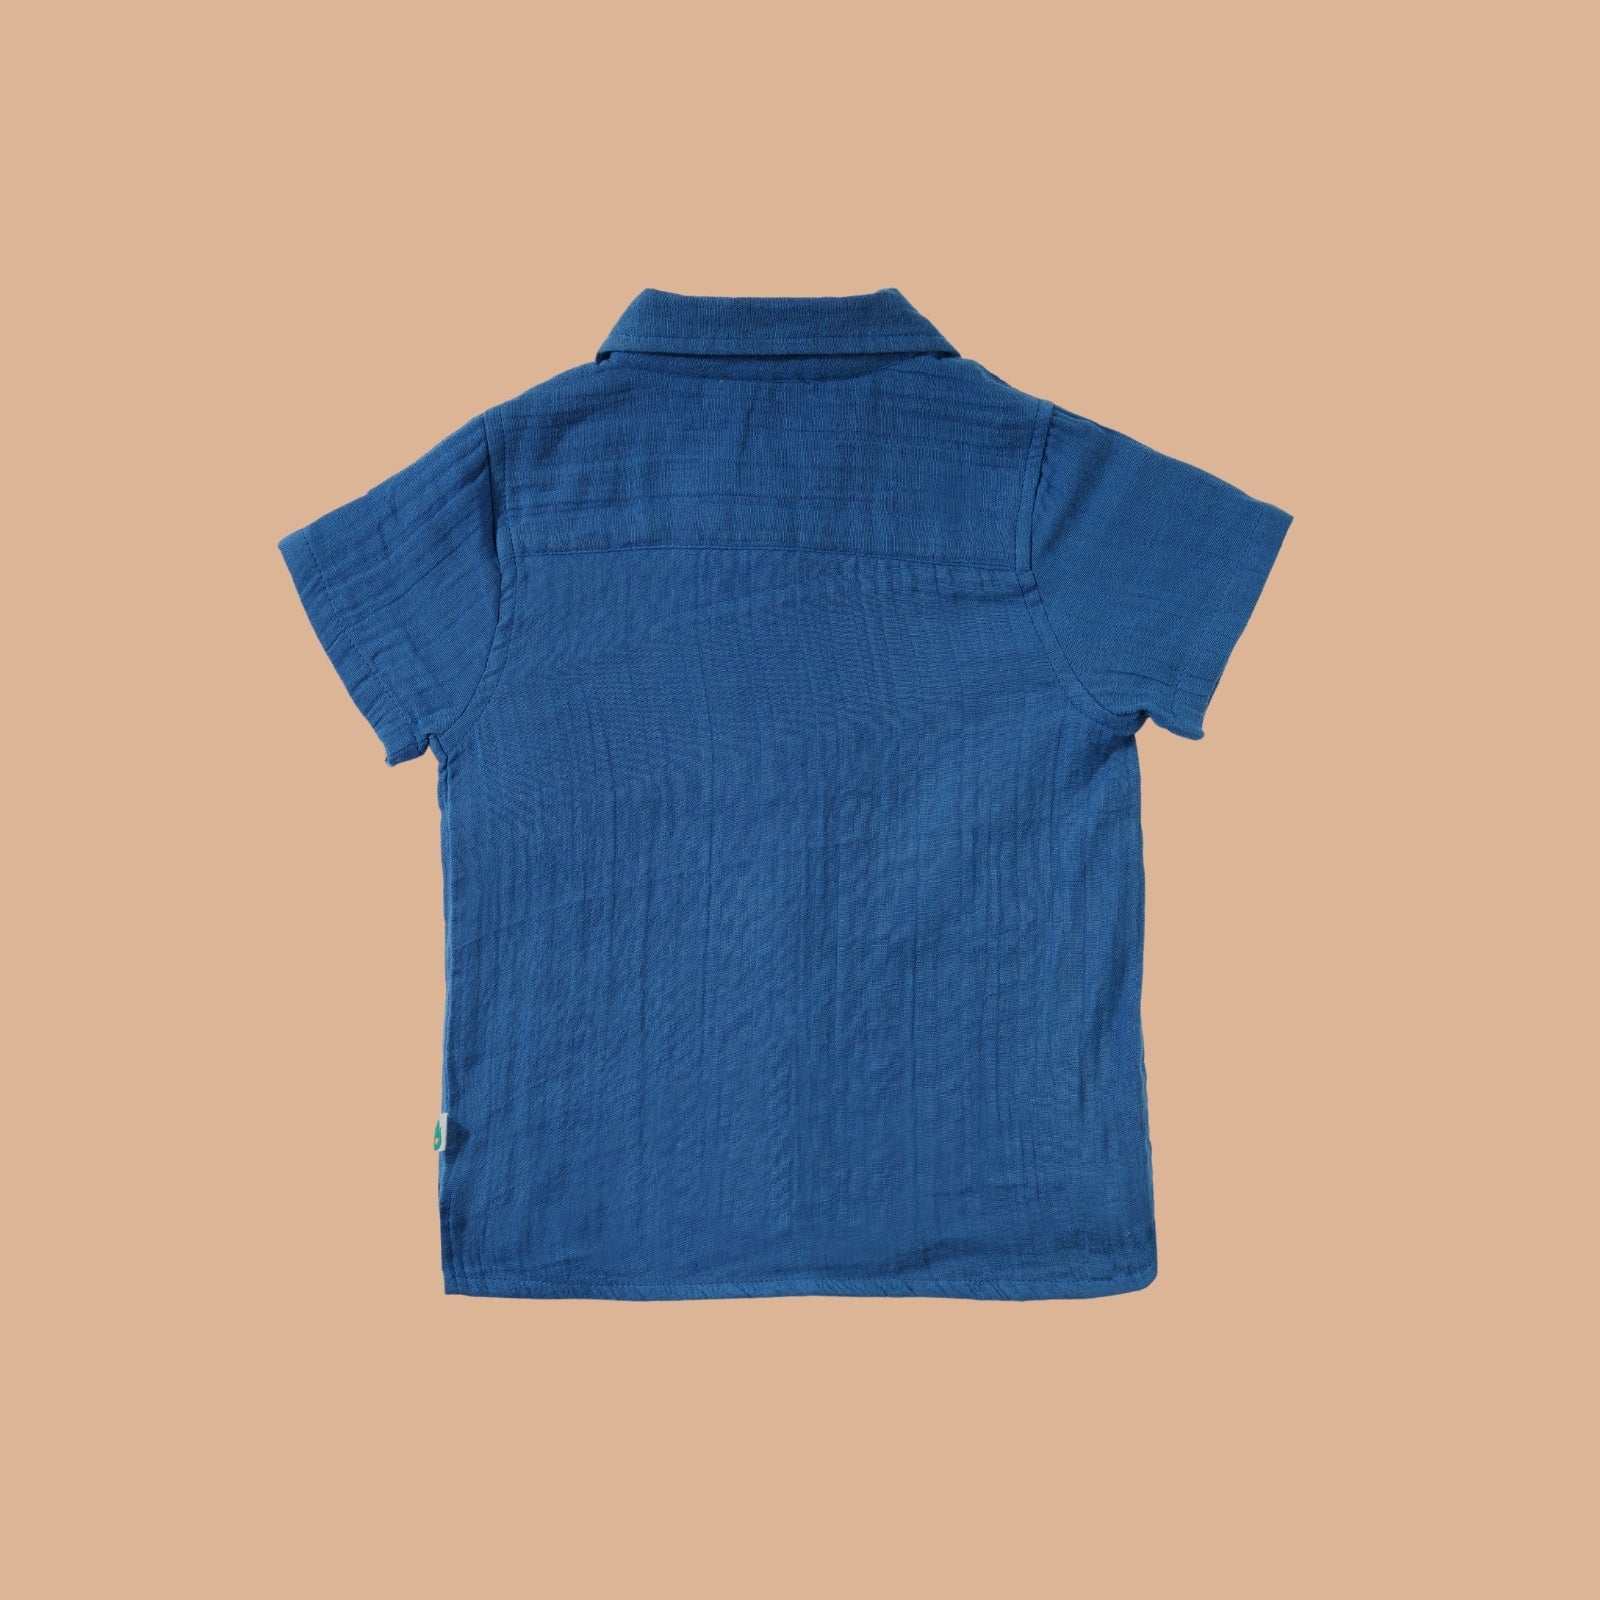 Greendeer Lovo Soft Double Cotton Half Sleeve Shirt - Greek Blue